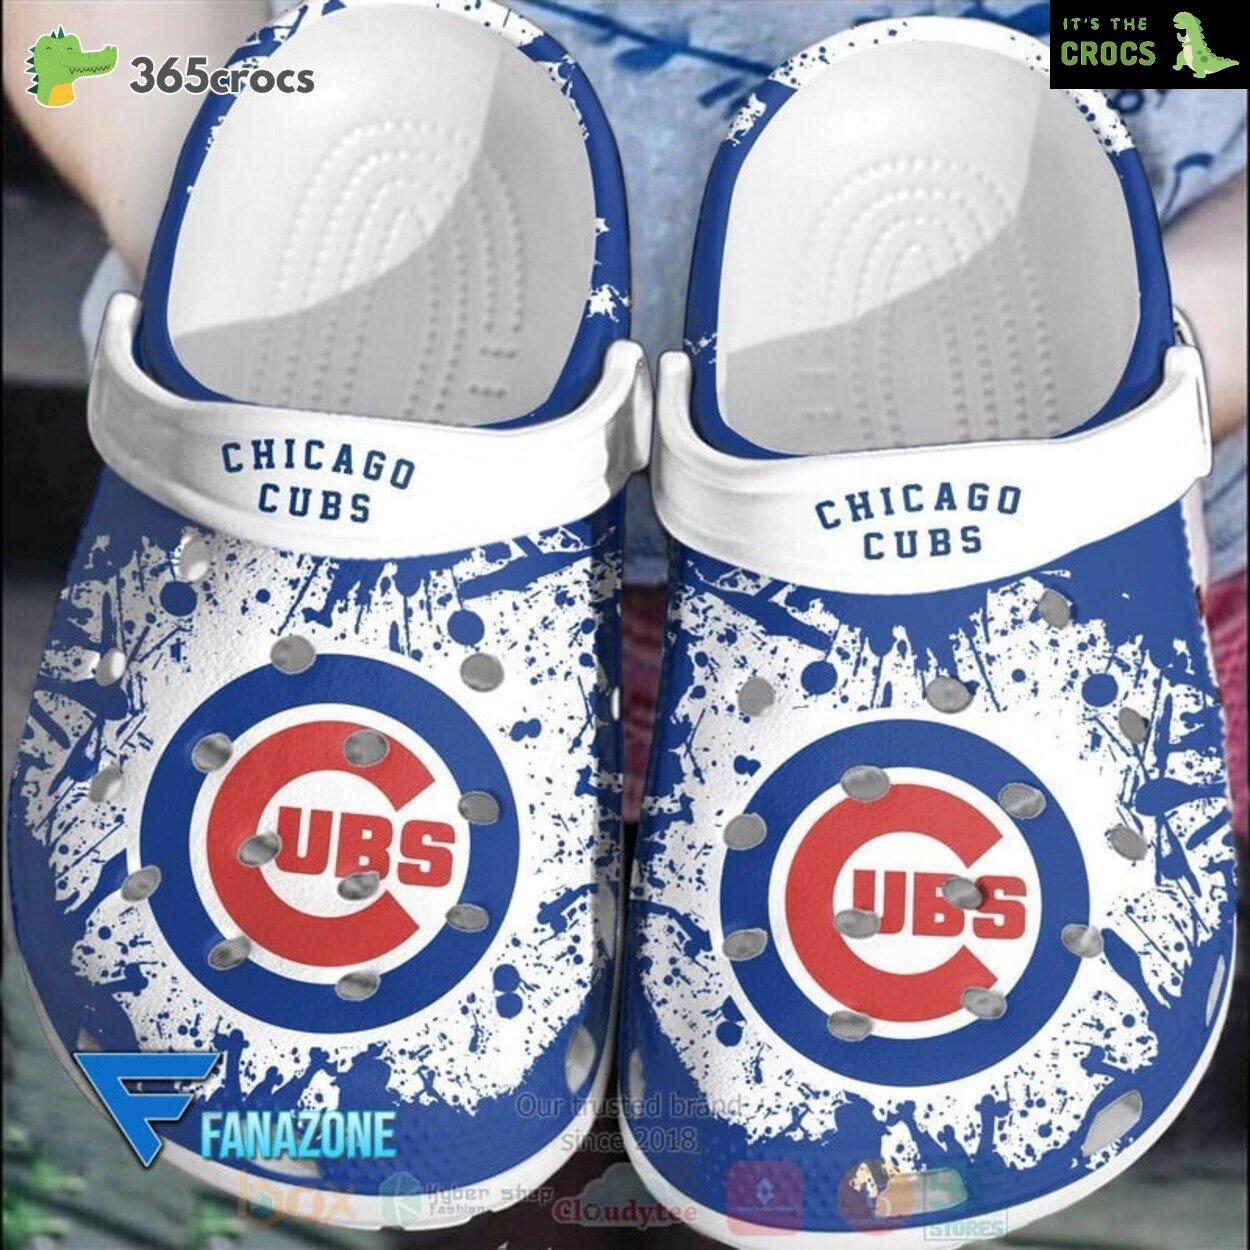 Chicago Cubs MLB Sport Crocs Clogs Shoes Comfortable